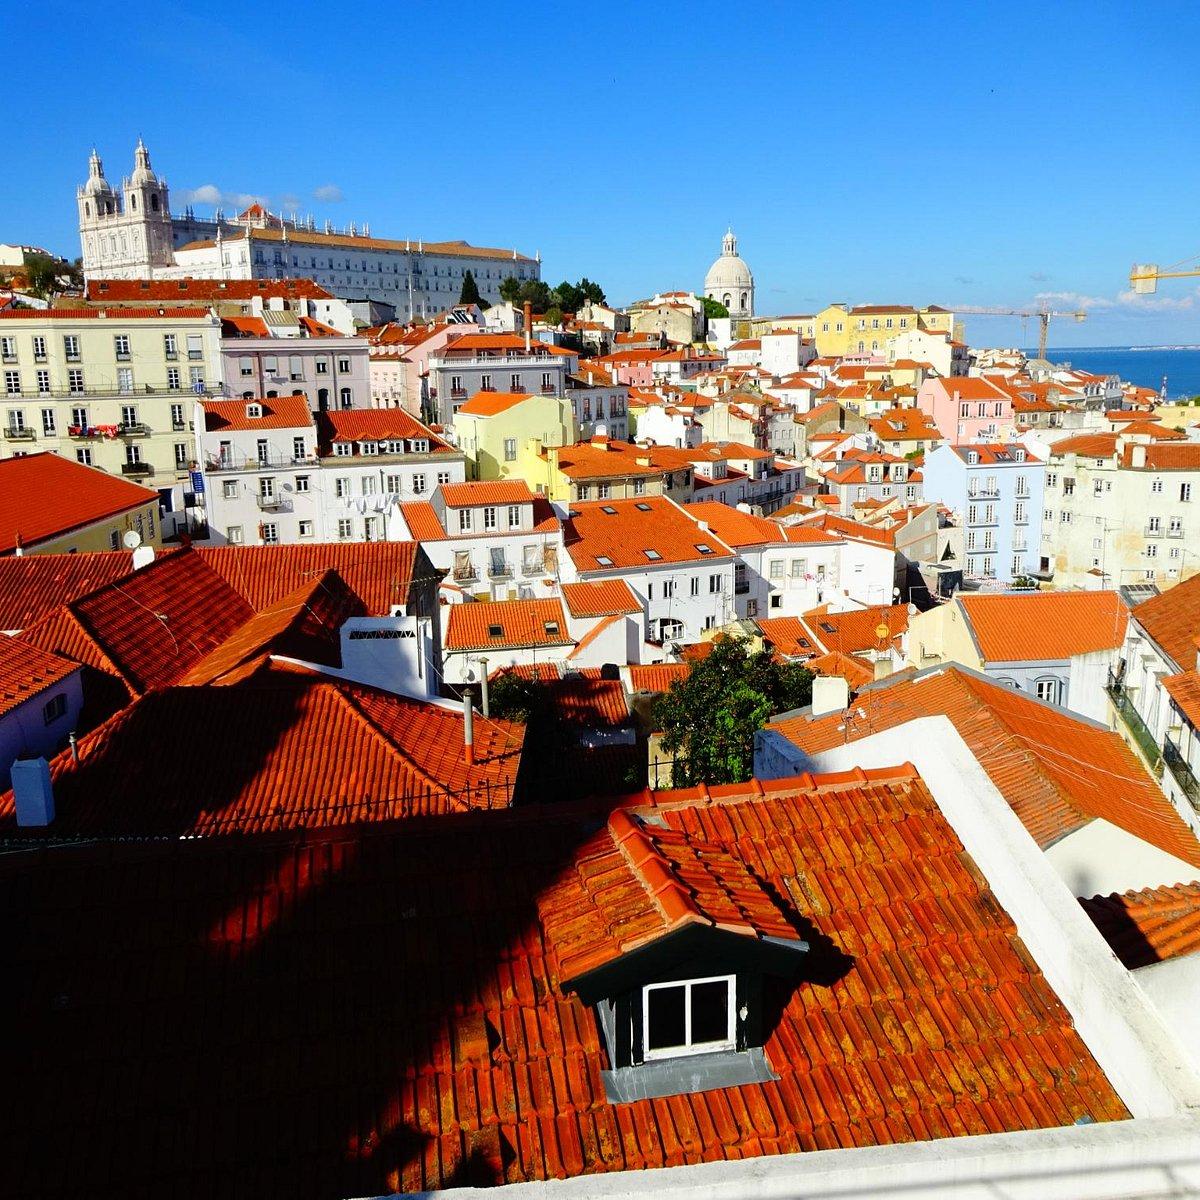 Miradouro de Santa Luzia (Lisbon) - All You Need to Know BEFORE You Go